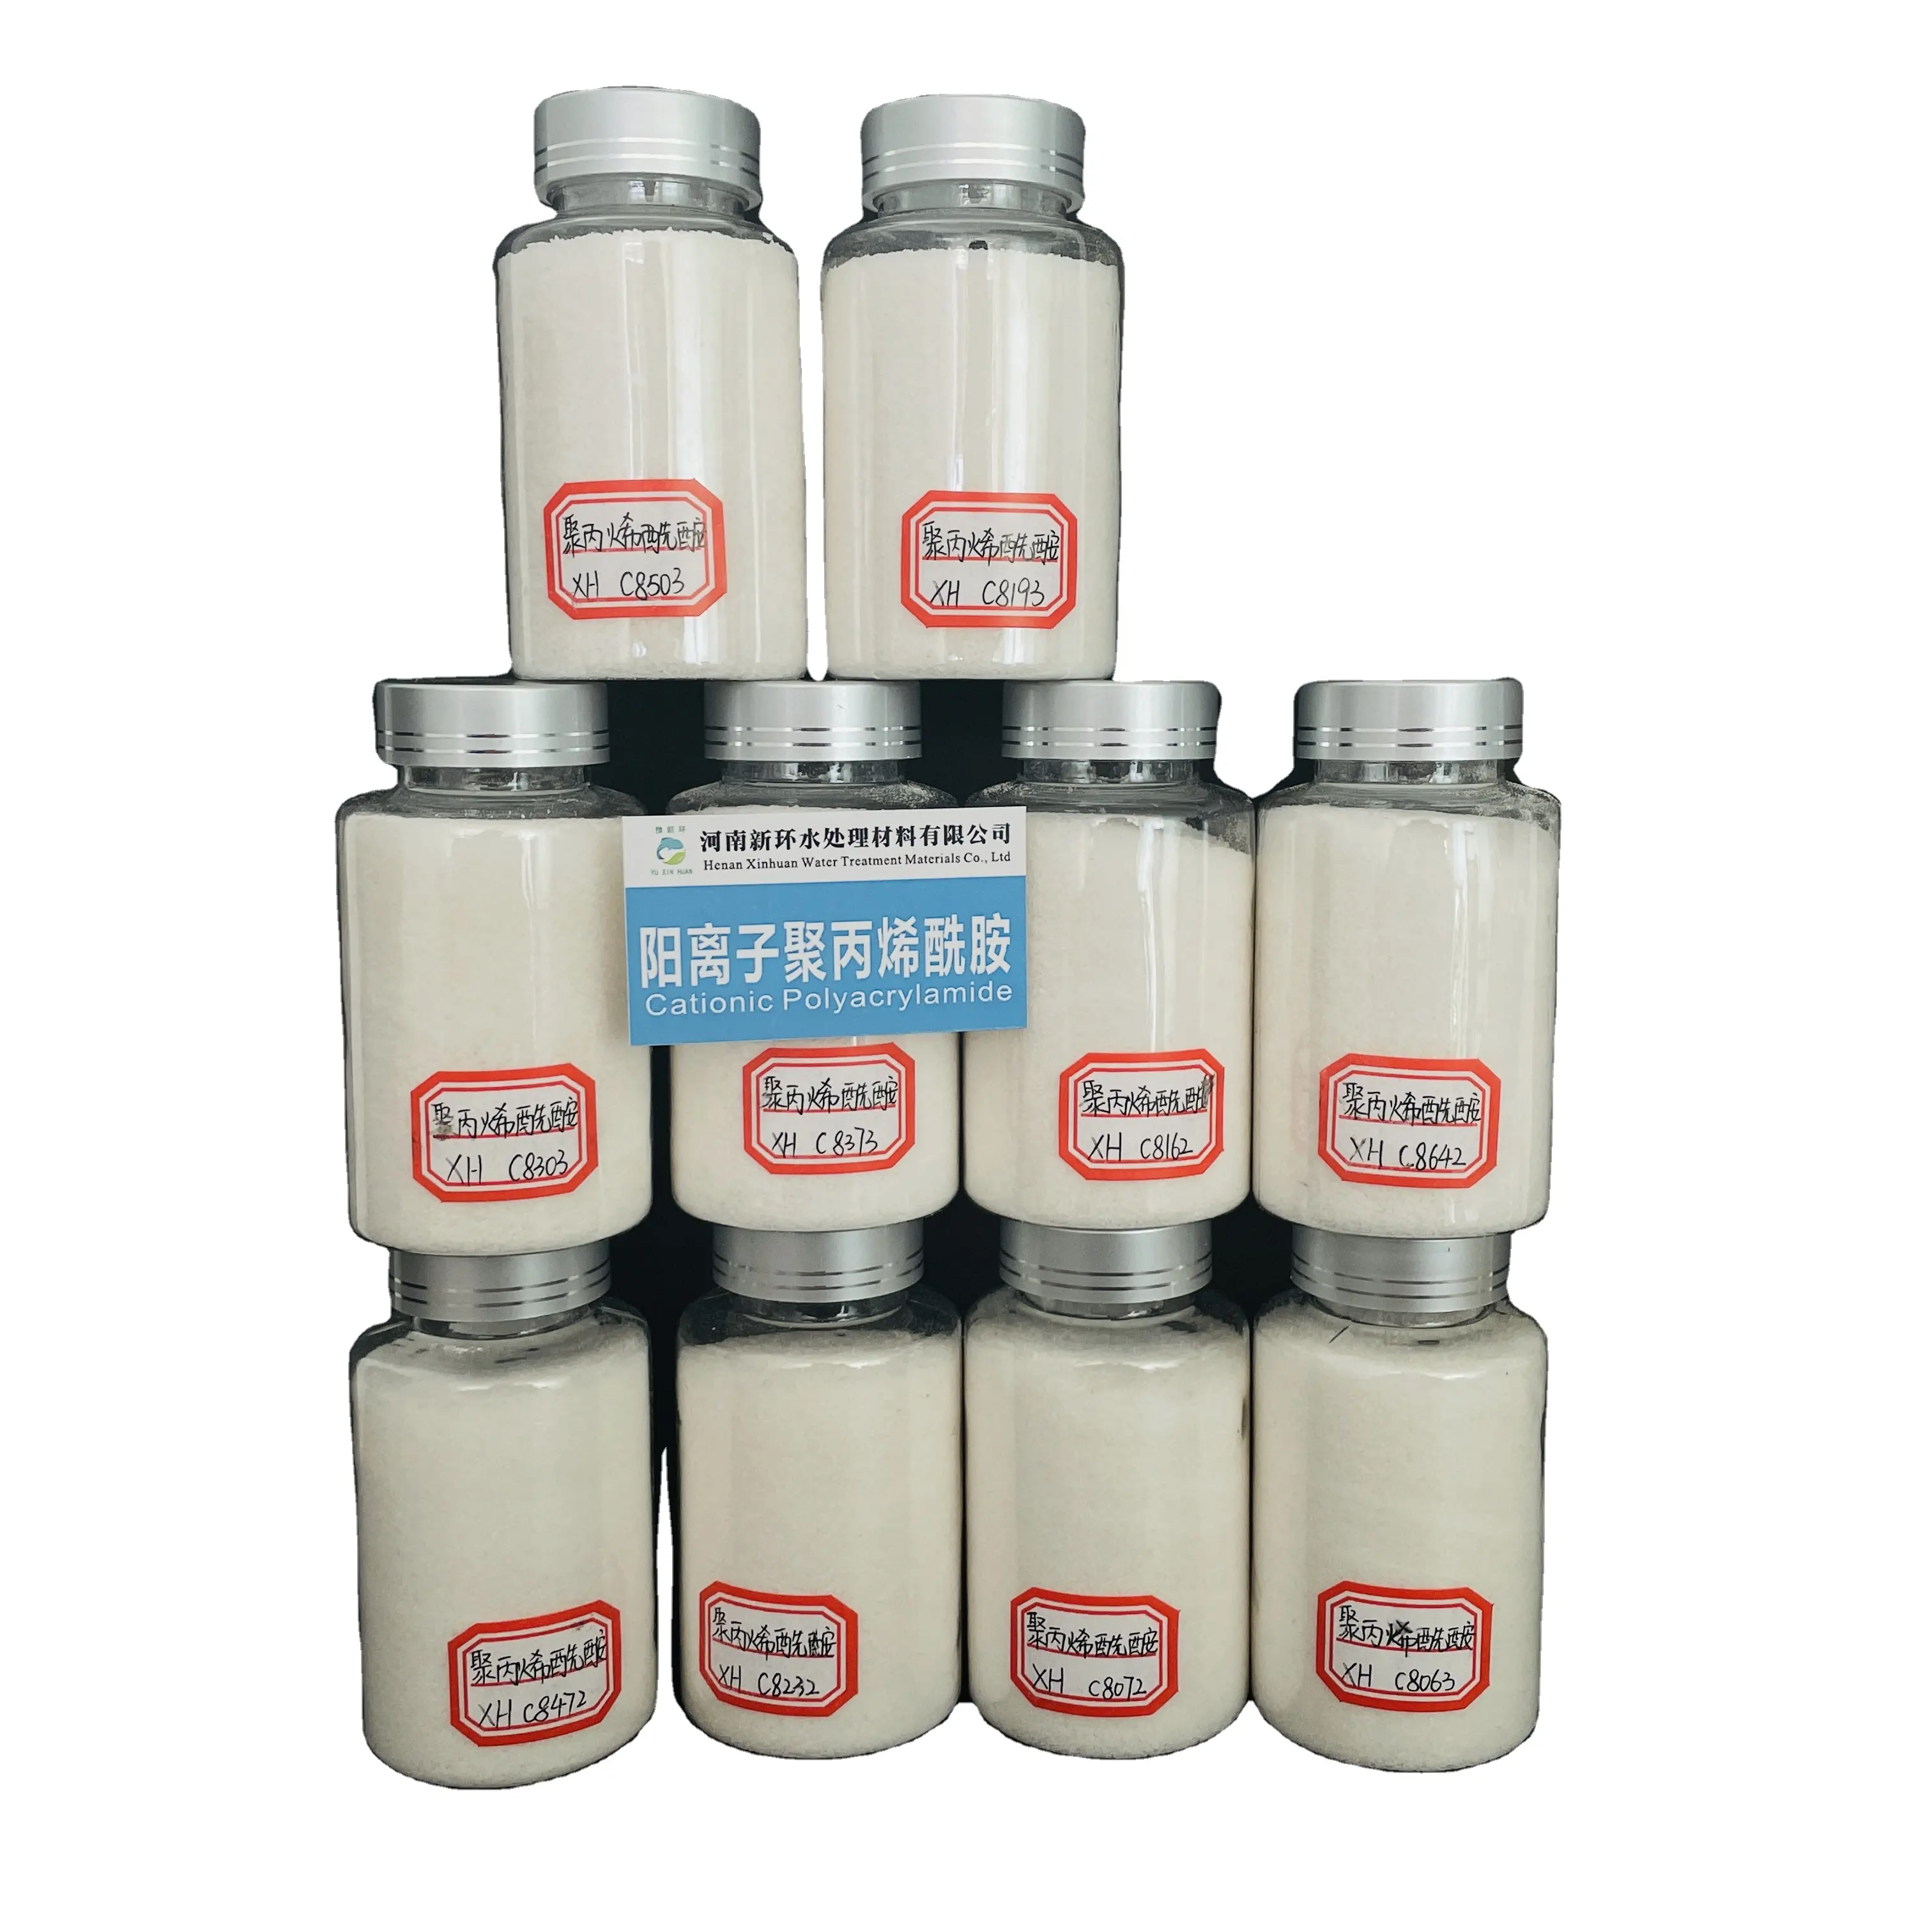 Acheter les fournisseurs chinois Polymères polyacrylamide cationique PAM/CPAM comme poudre floculante